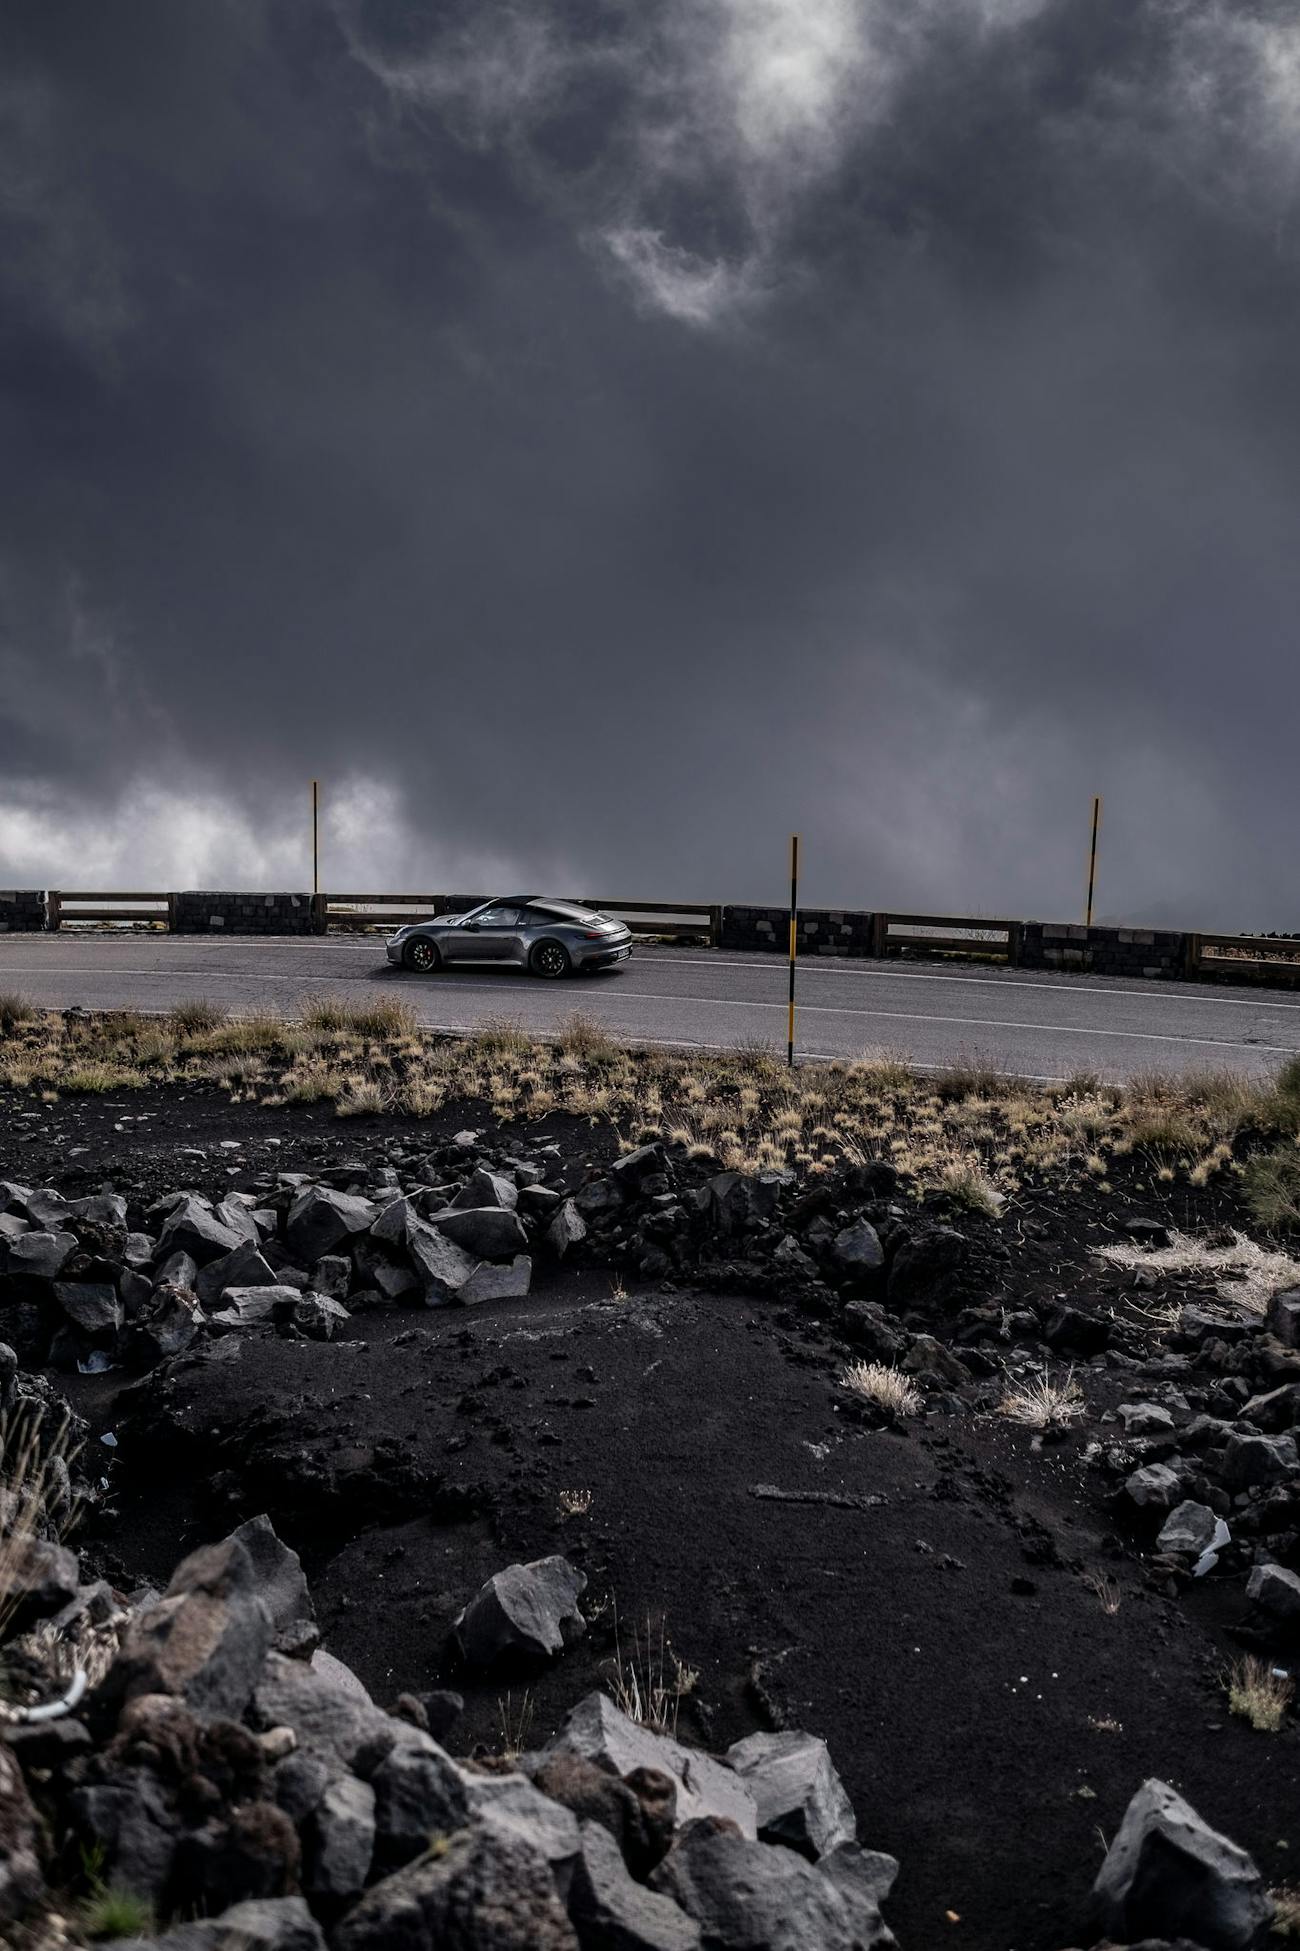 Porsche 911 Targa on road surrounded by dark, volcanic rocks